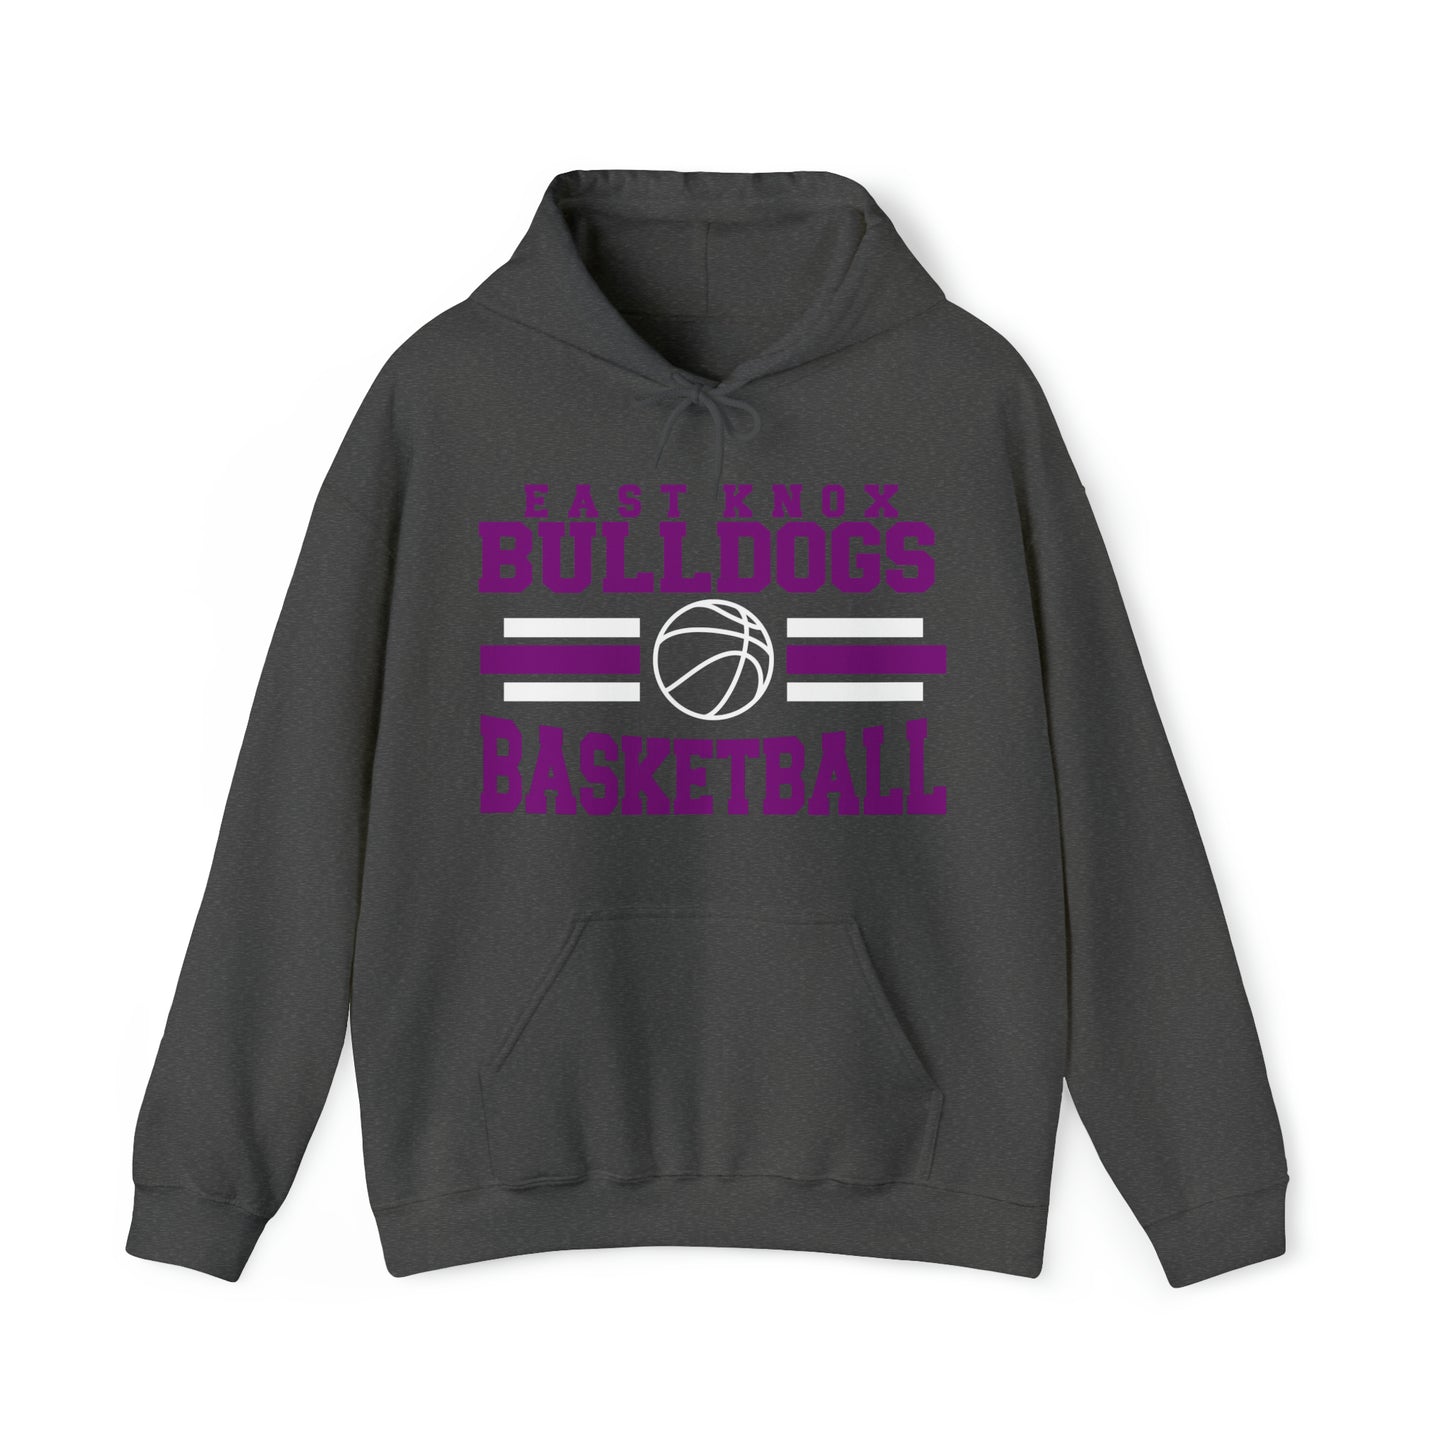 East Knox Bulldogs Basketball Heavy Blend™ Hooded Sweatshirt